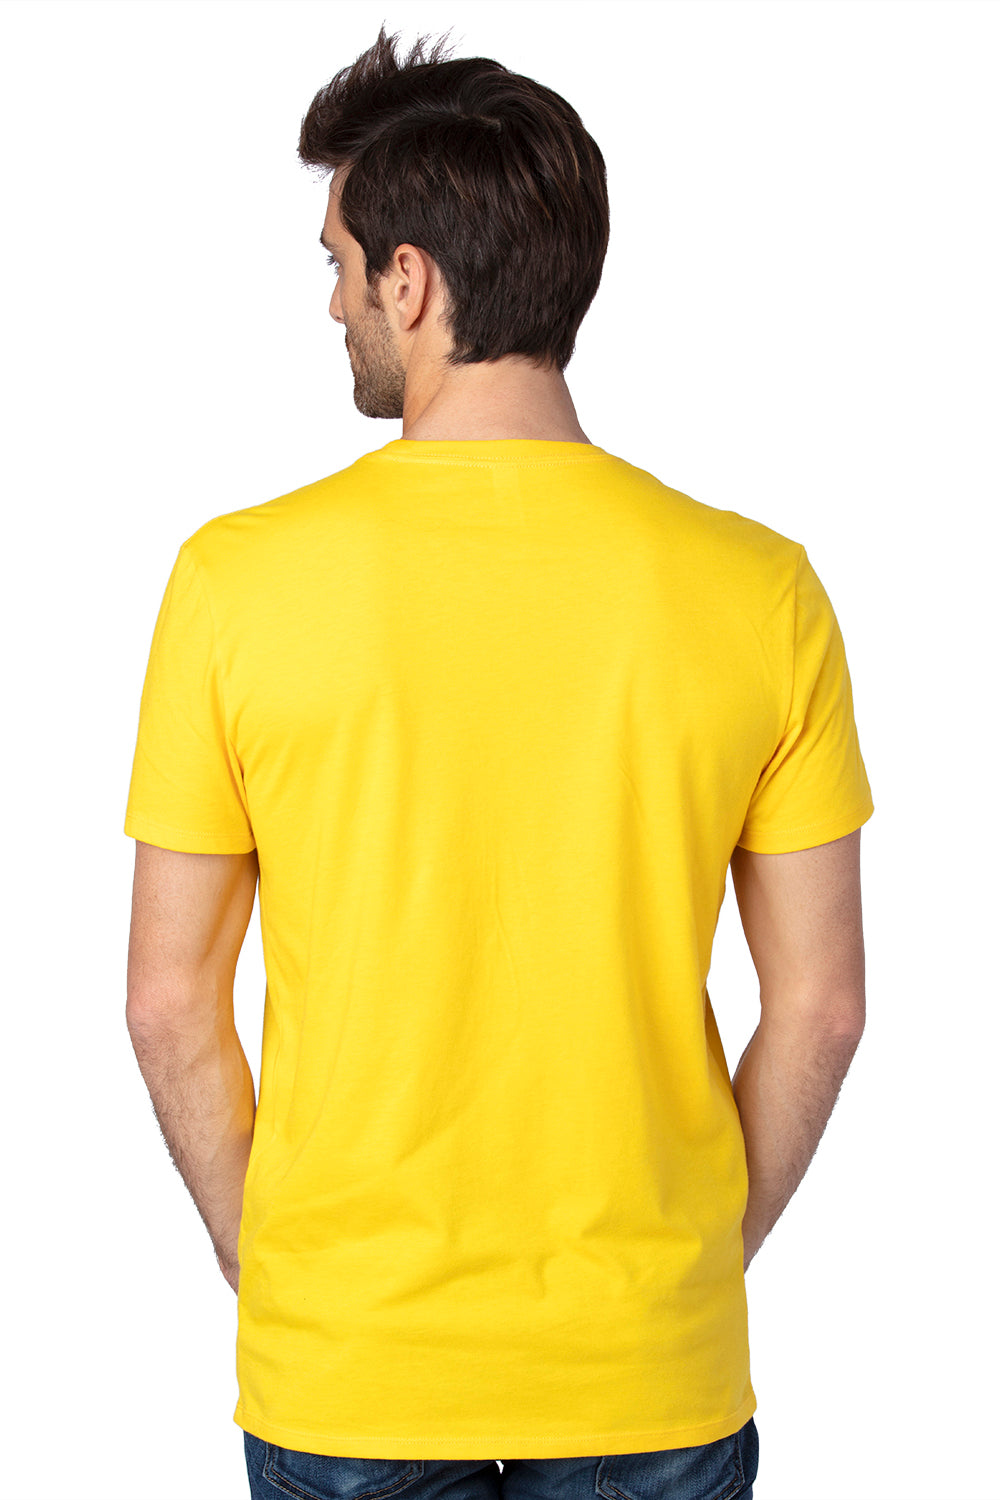 Threadfast Apparel 100A Mens Ultimate Short Sleeve Crewneck T-Shirt Safety Yellow Back